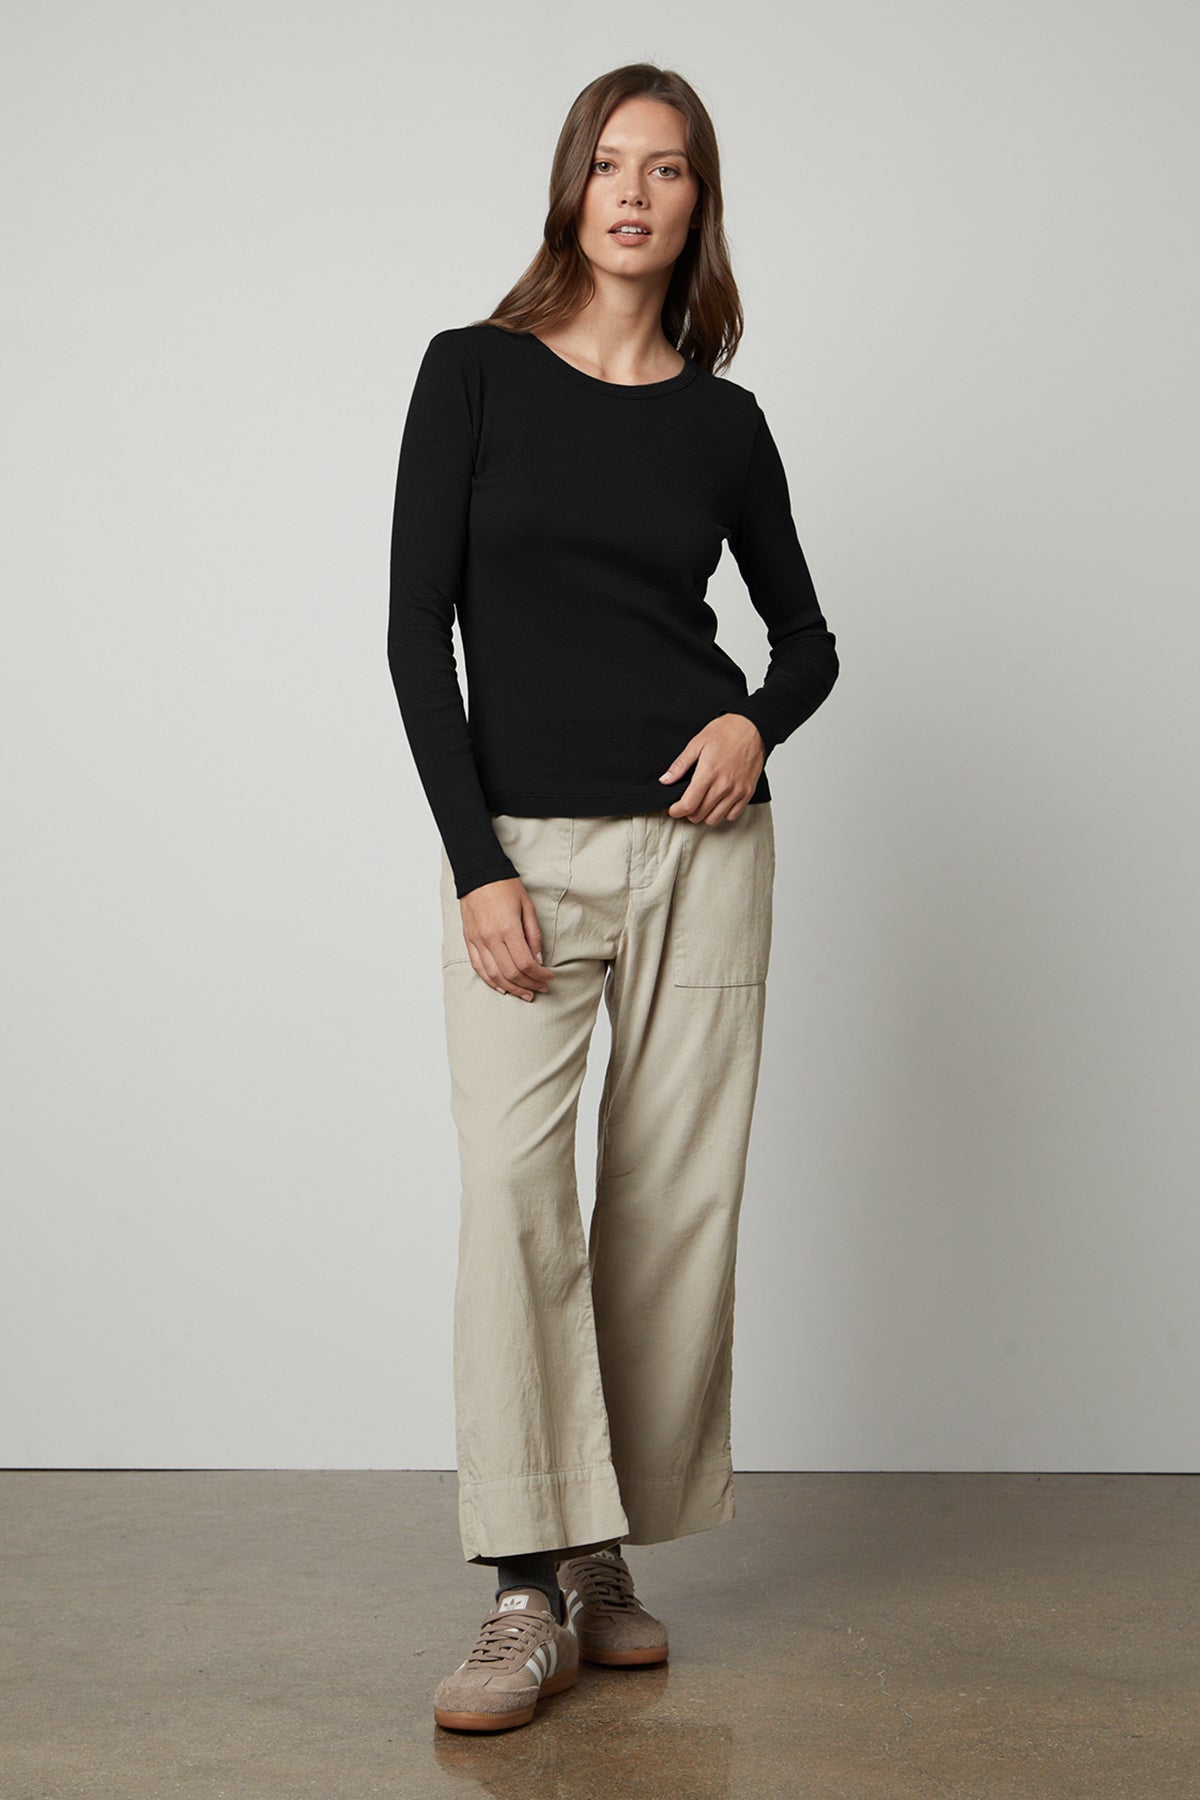 The model is wearing a black long-sleeved Velvet by Graham & Spencer BAYLER RIBBED SCOOP NECK TEE and beige wide leg pants.-35206768558273